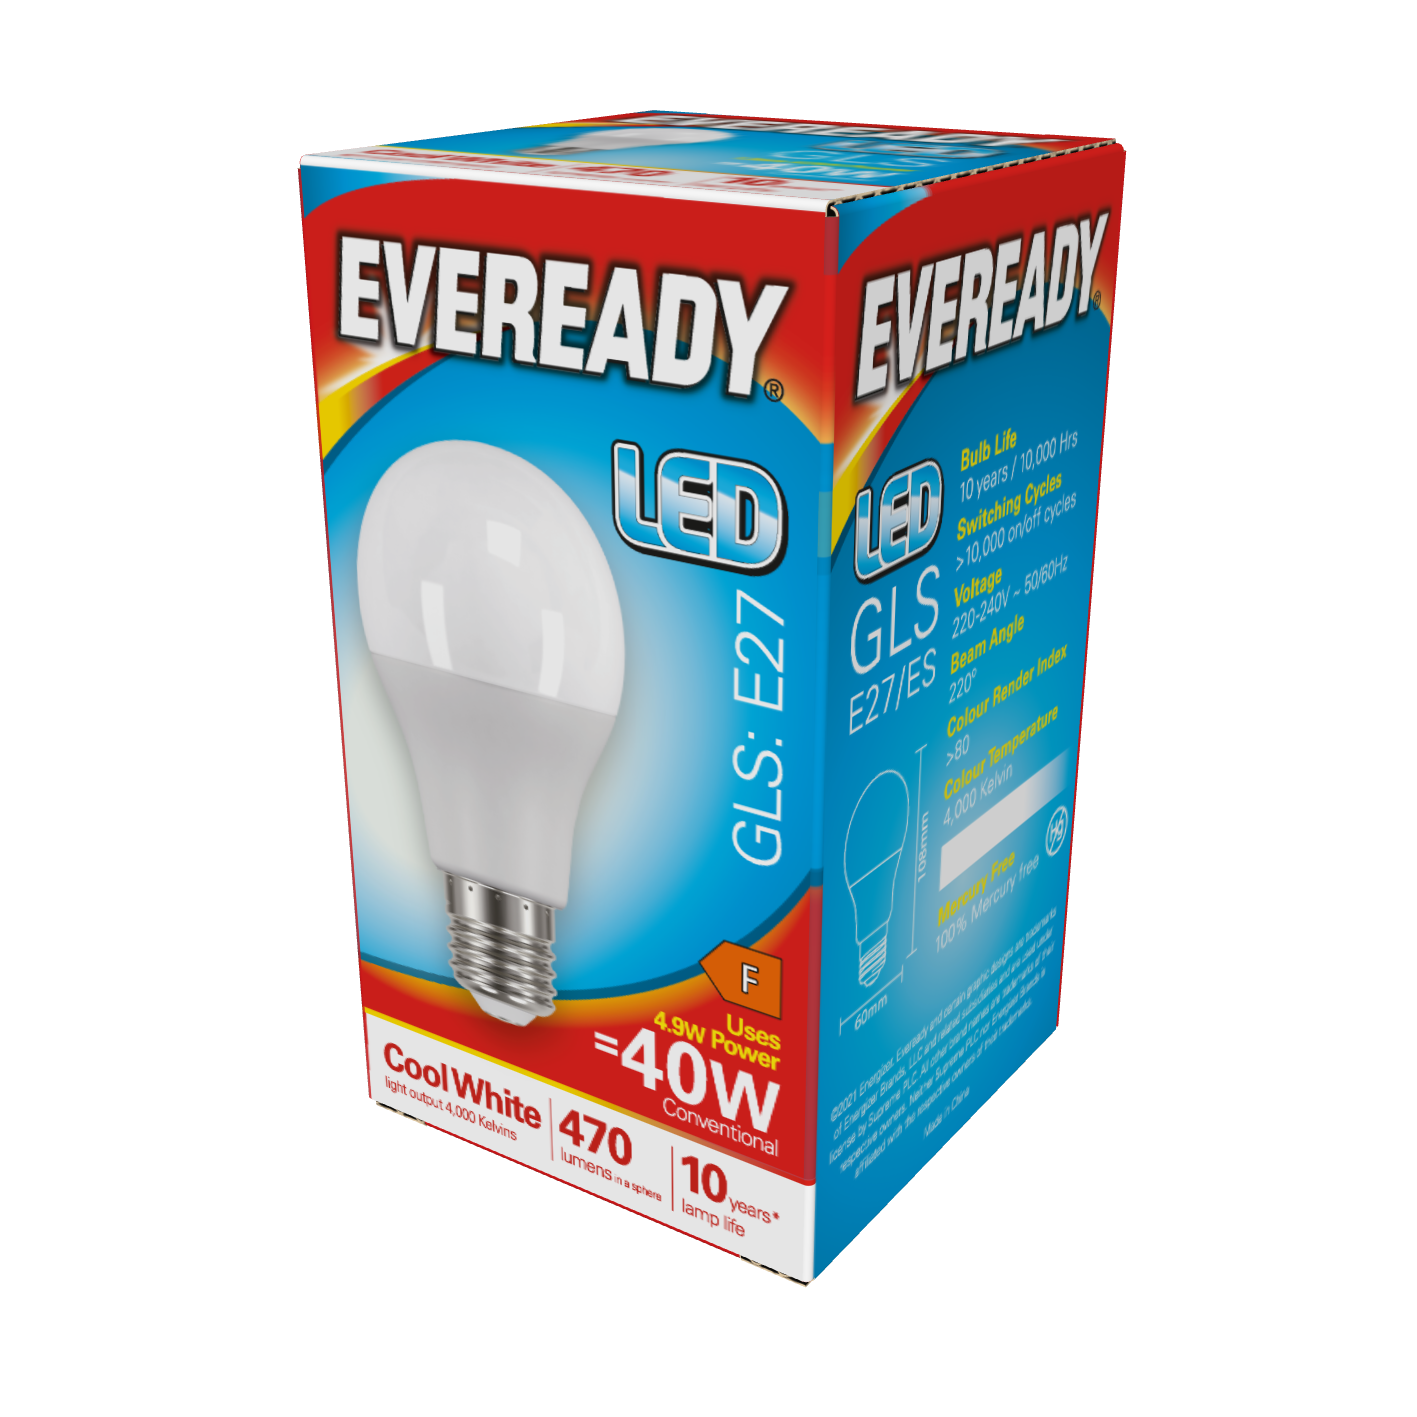 Eveready LED GLS E27 (ES) 470lm 4.9W 4,000K (Cool White), Box of 1